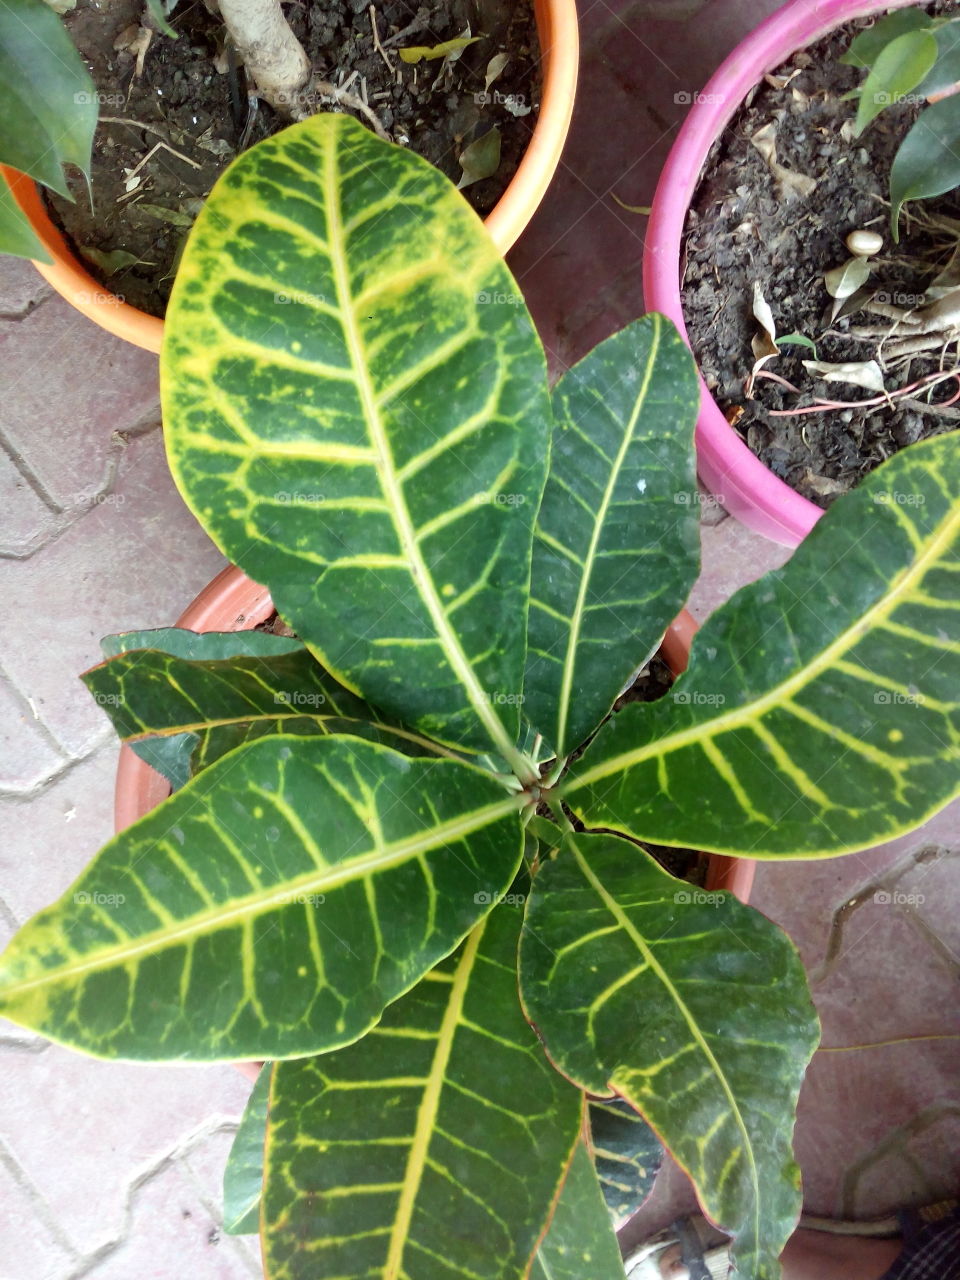 It is a leaf of beautiful tree